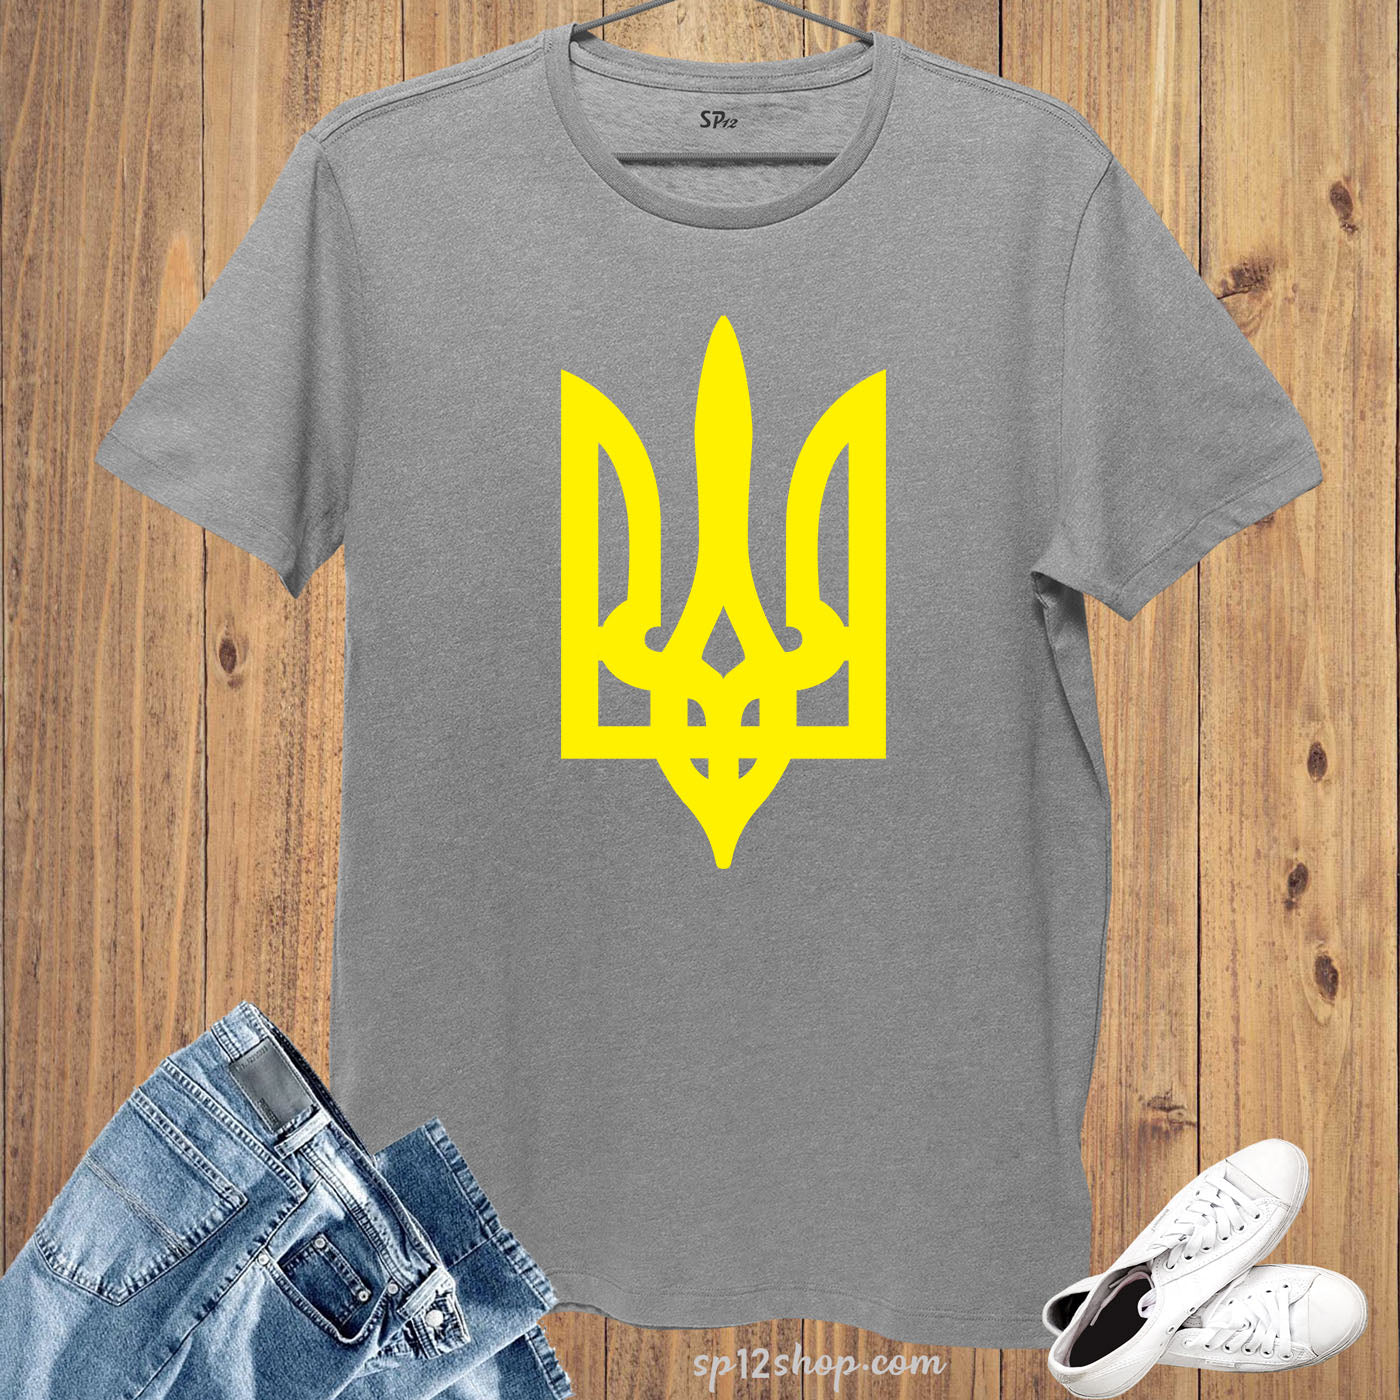 Ukraine Logo T Shirt We Support Ukraine We Stand For Ukraine Gift Tees